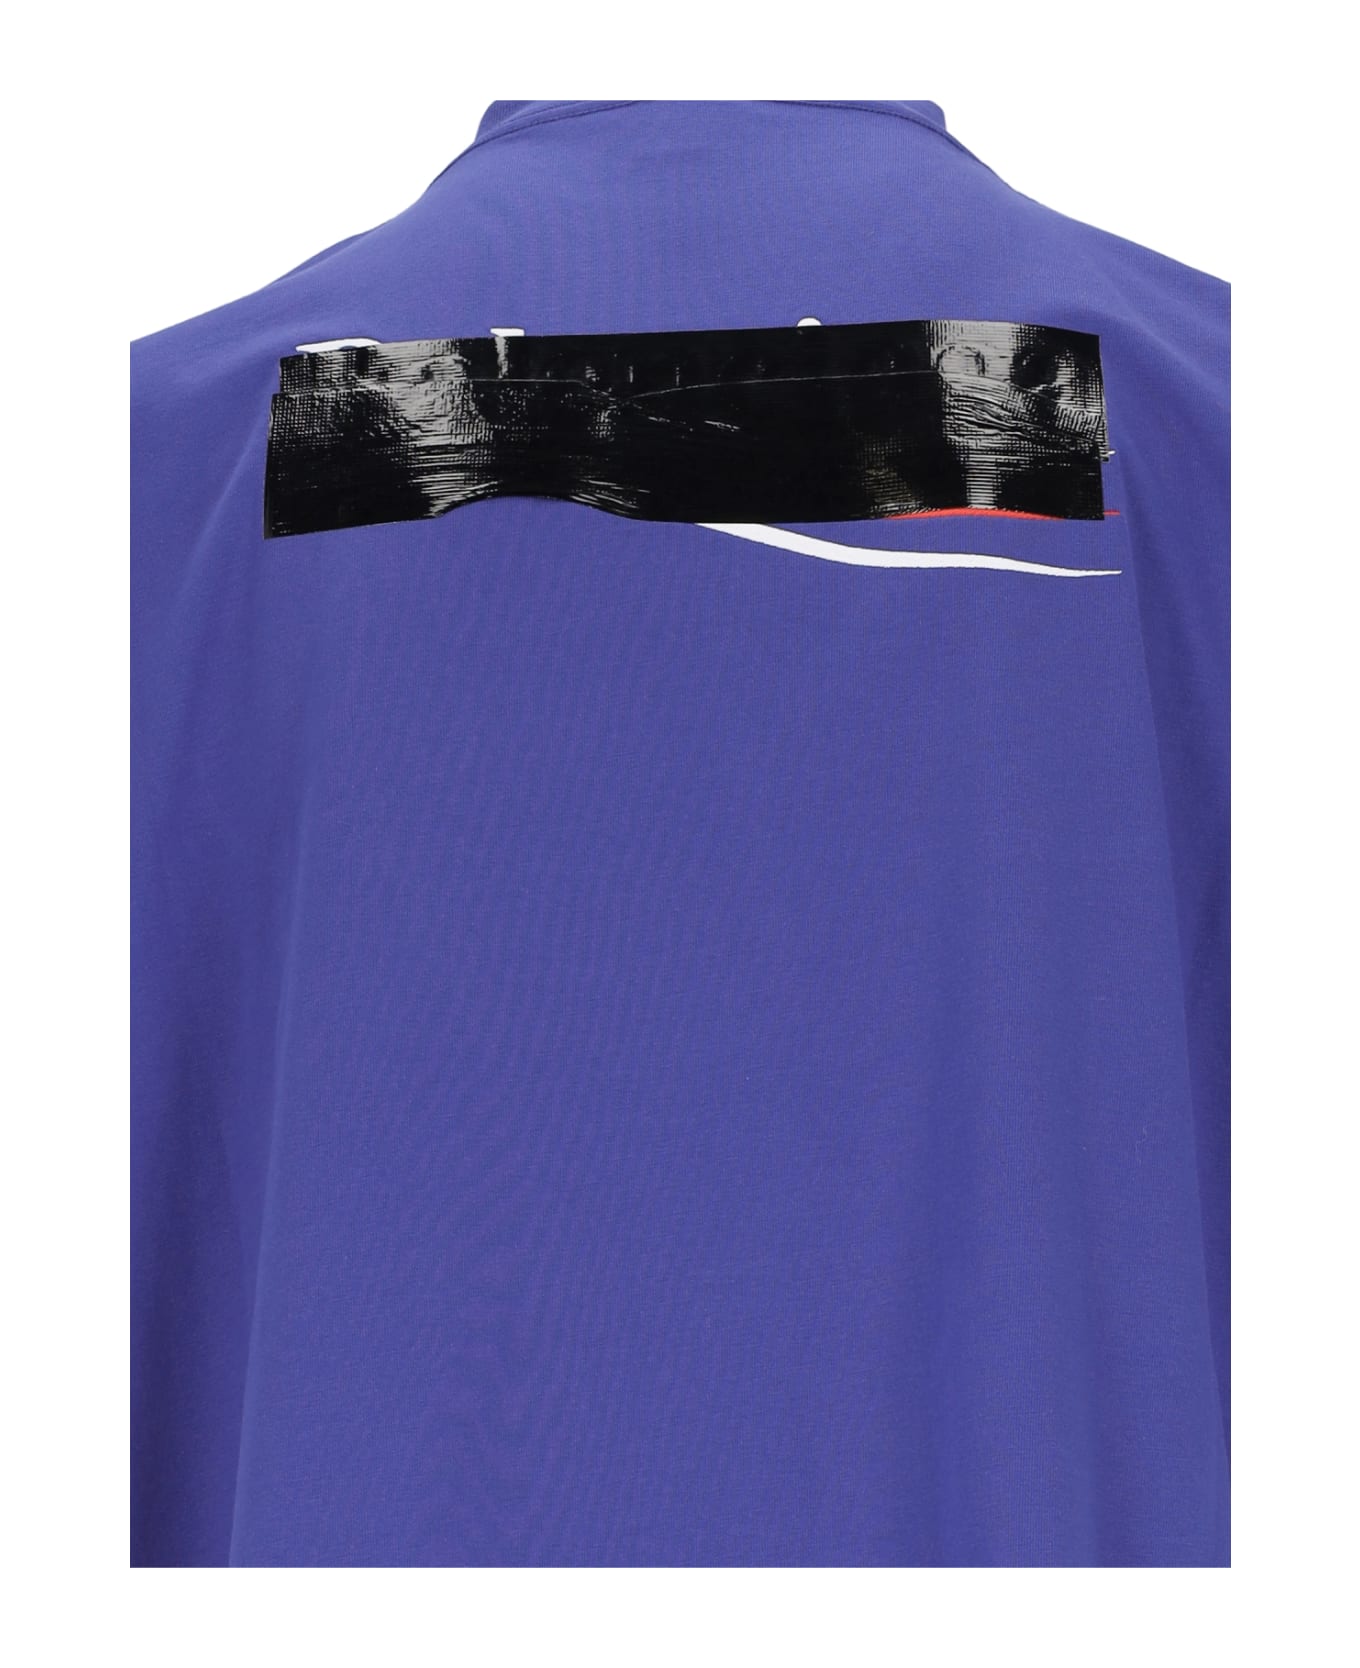 Balenciaga 'gaffer' T-shirt - Purple